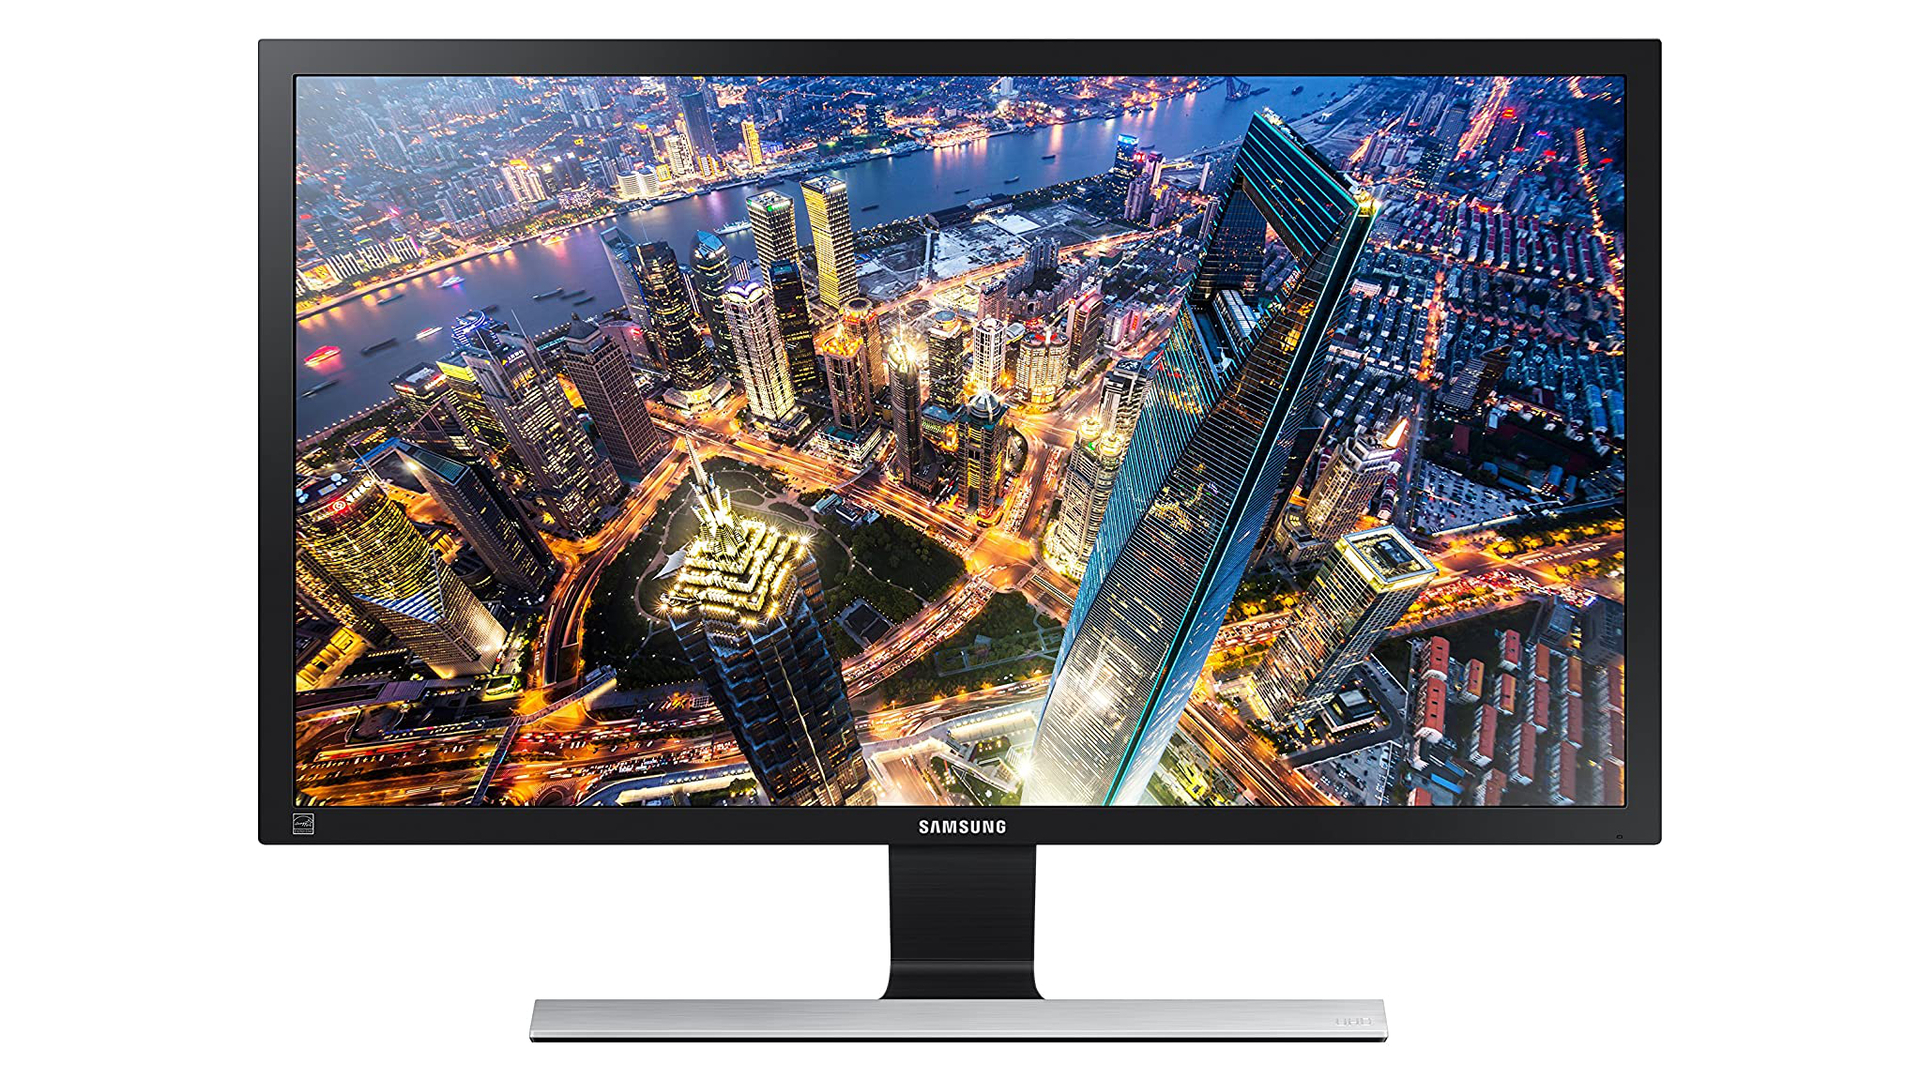 Samsung 28 Inch UE570 - cheap 4K monitors